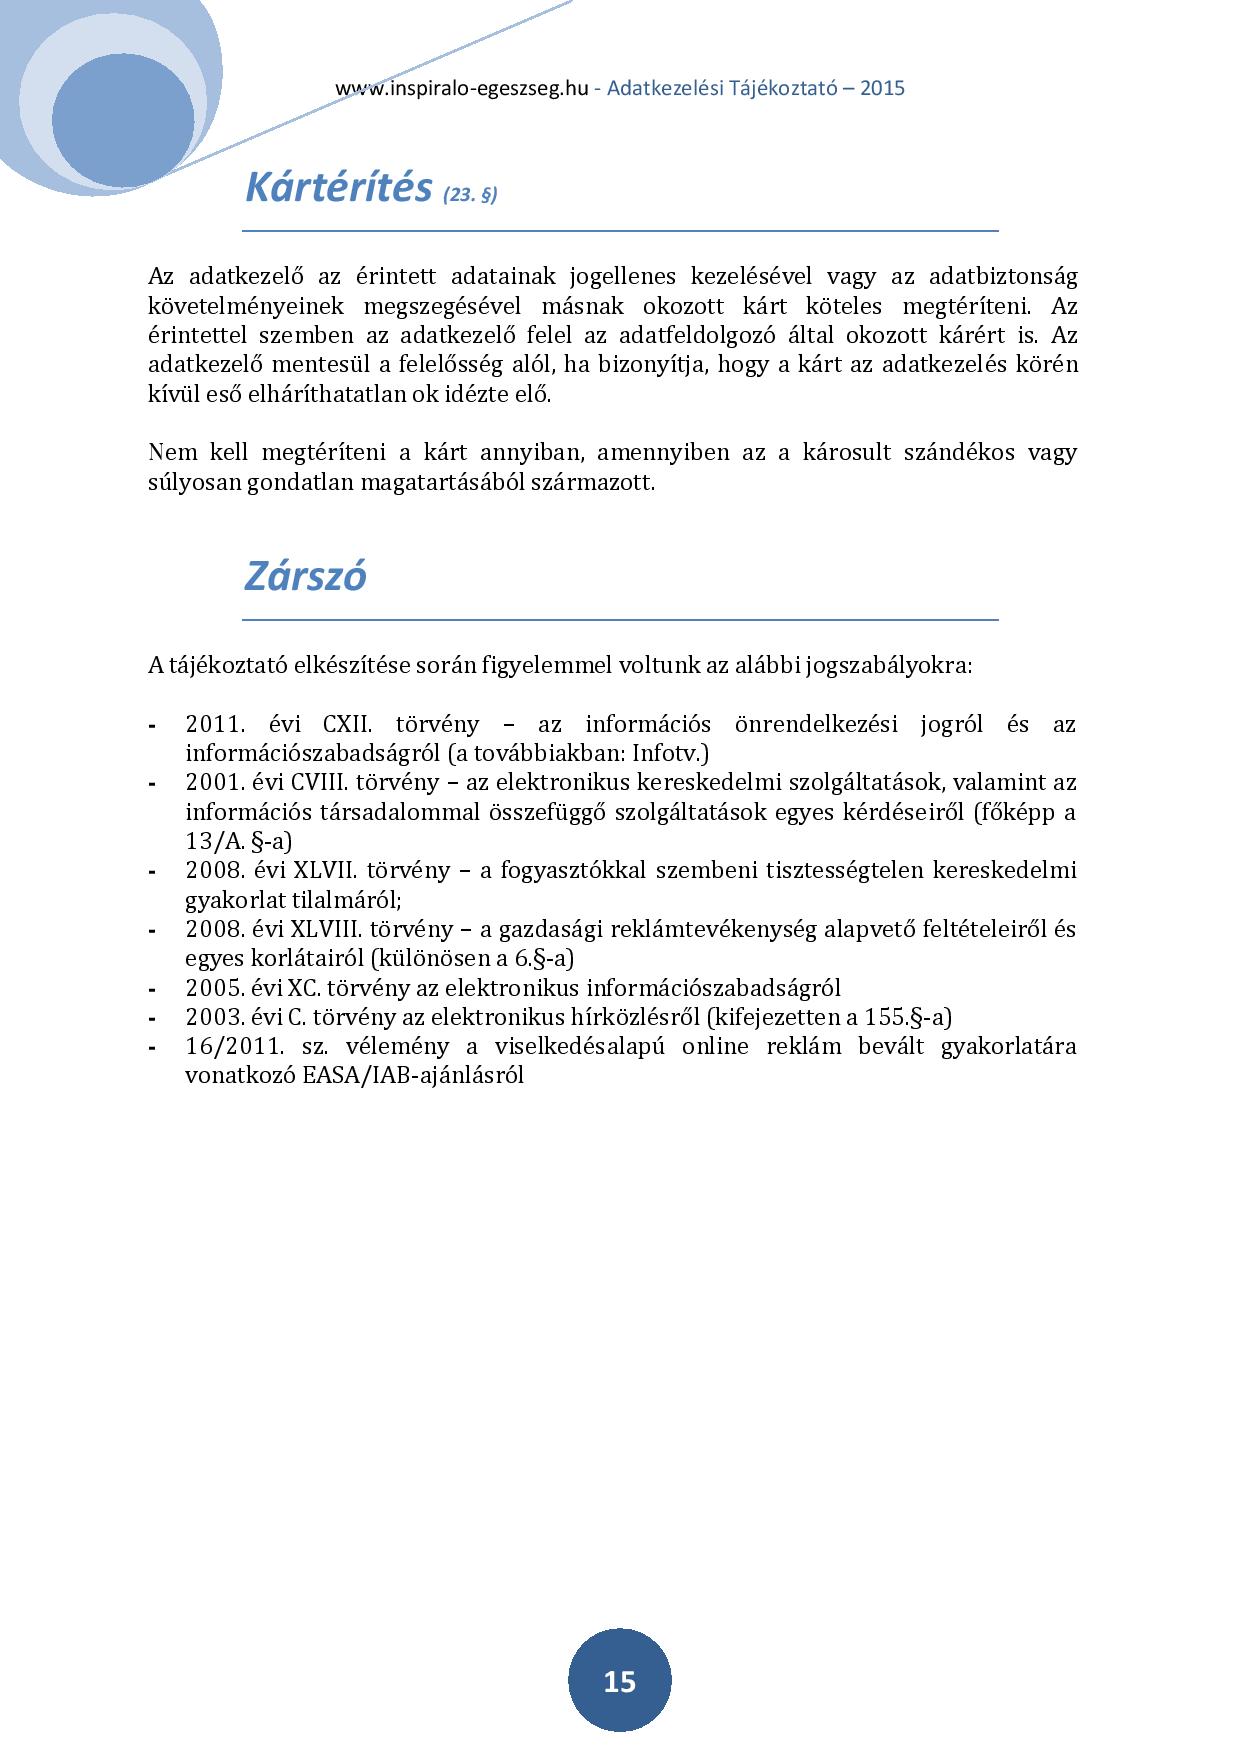 egri-anna-inspiralo-egeszseg-adatvedelmi-page-001